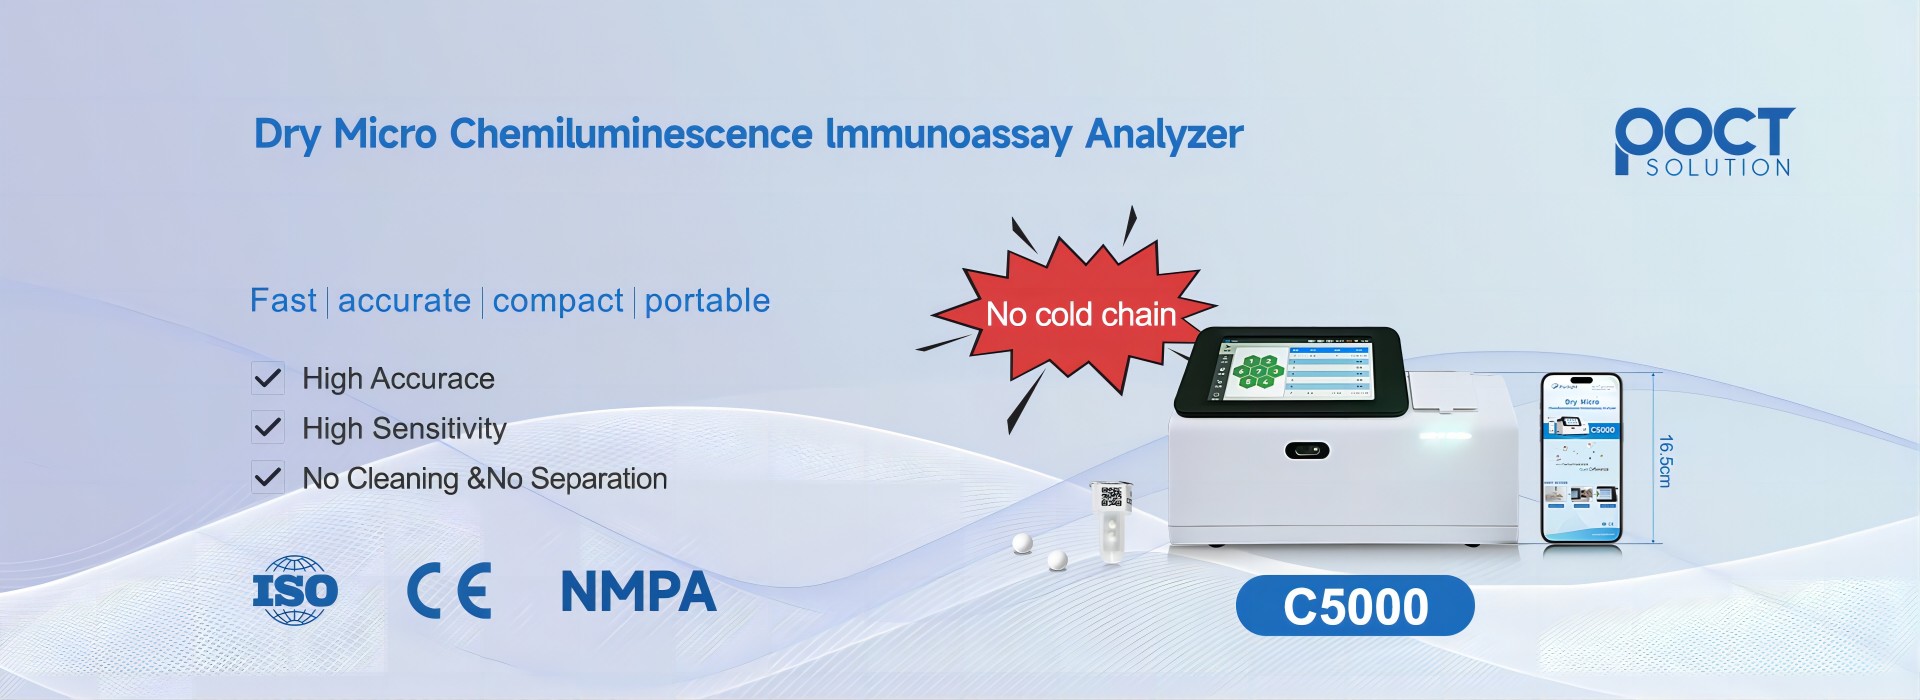 What is chemiluminescence immunoassay analyzer used for?